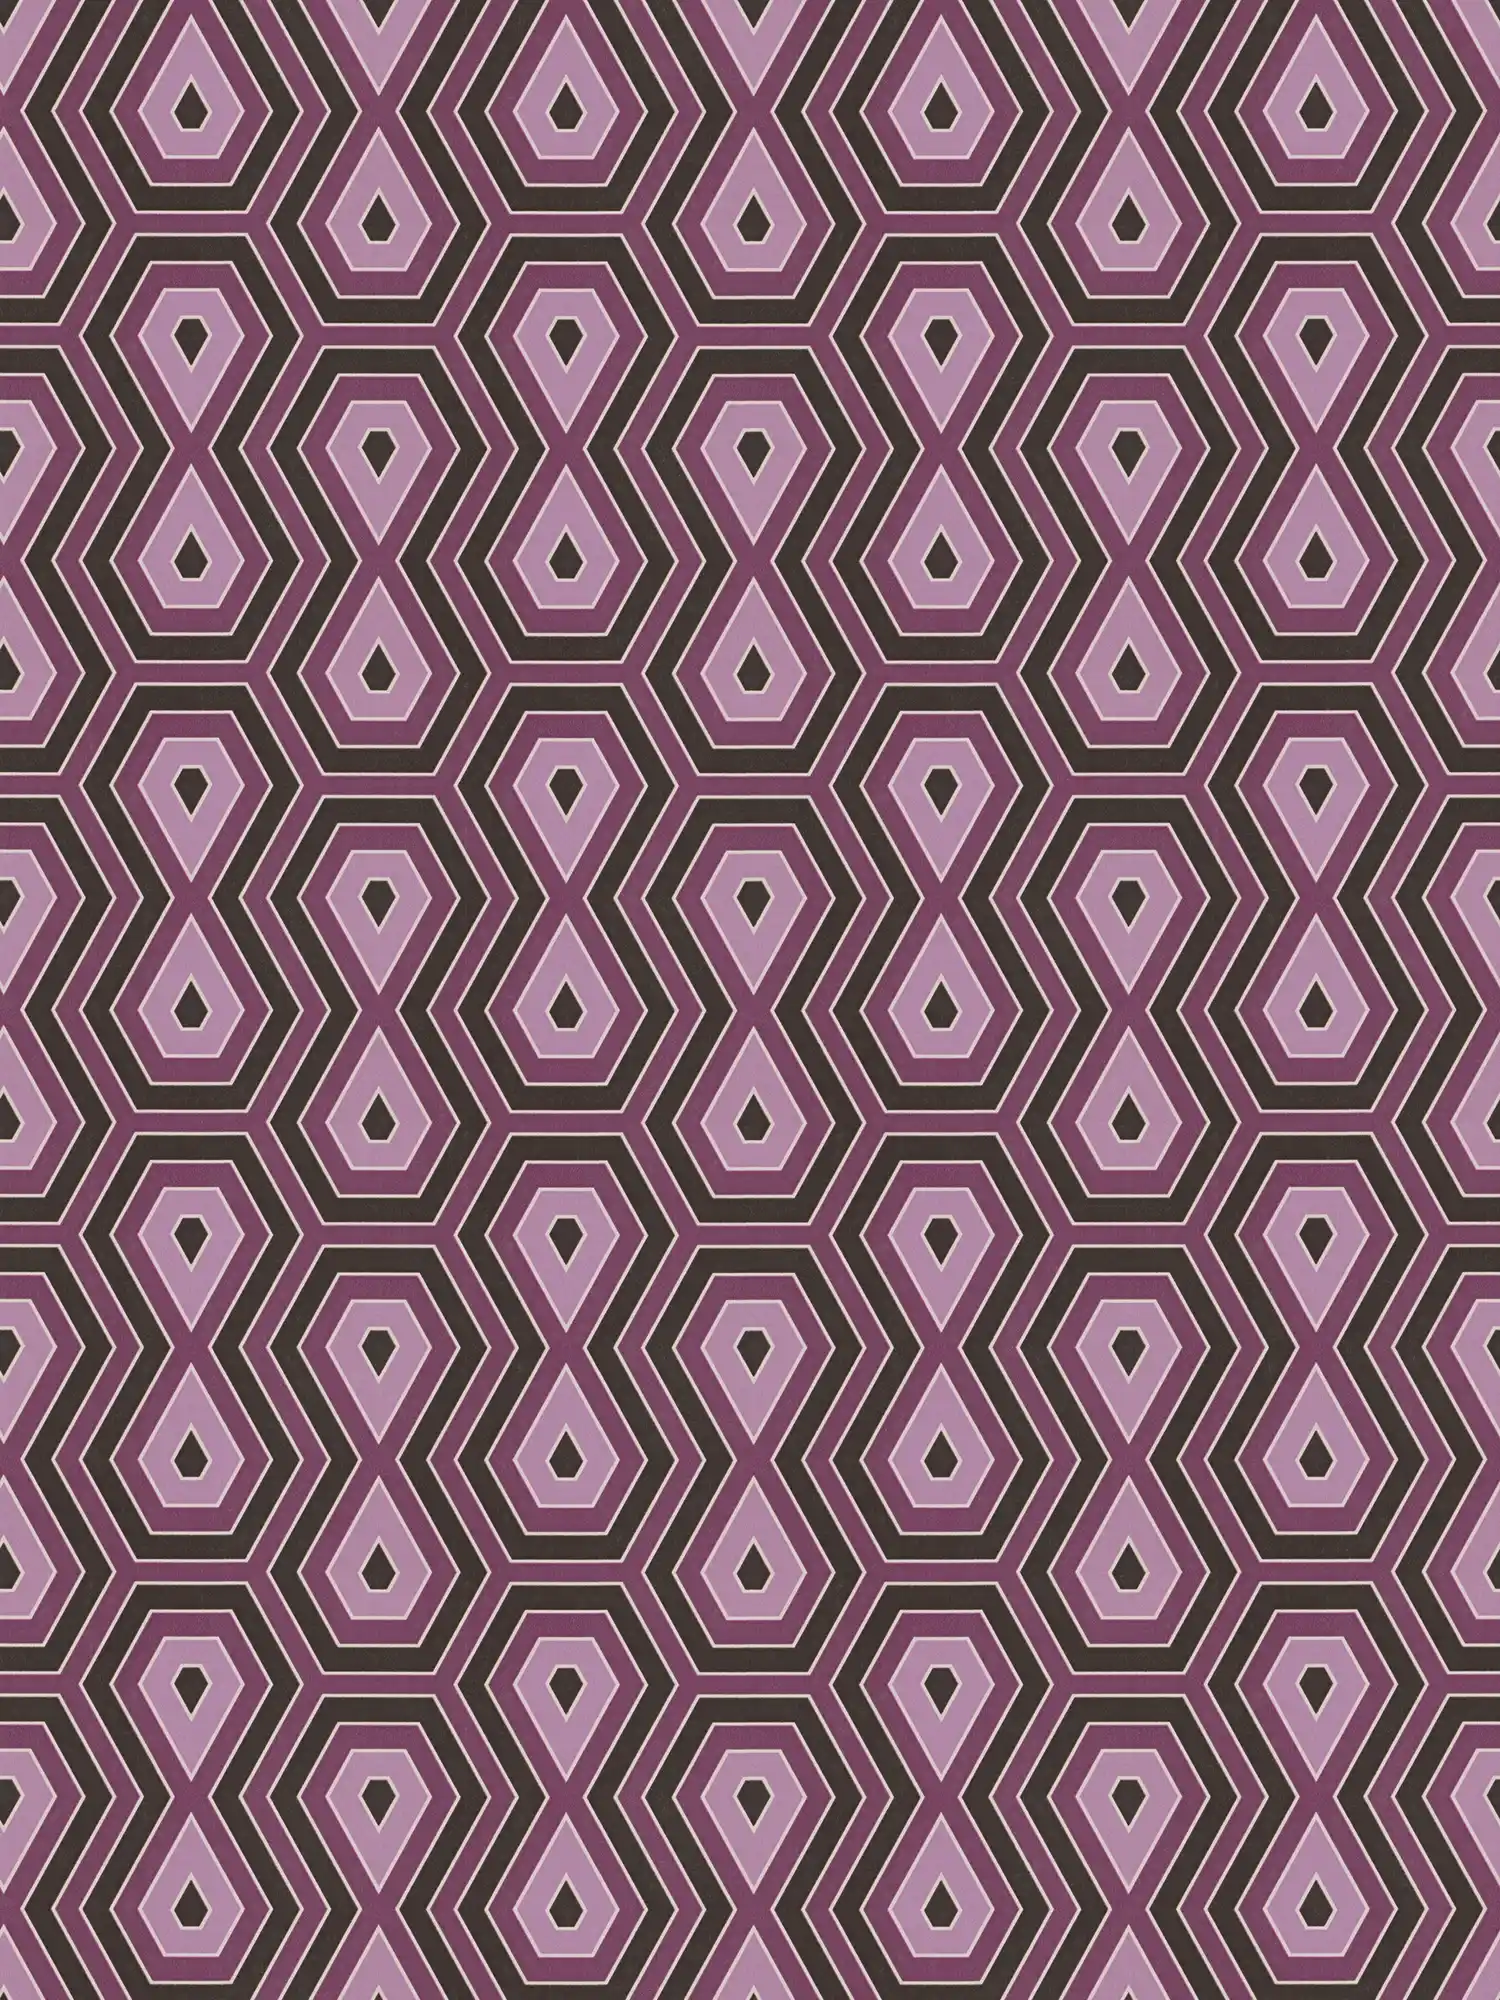 Pattern wallpaper purple & old pink with graphic retro design - purple, black
